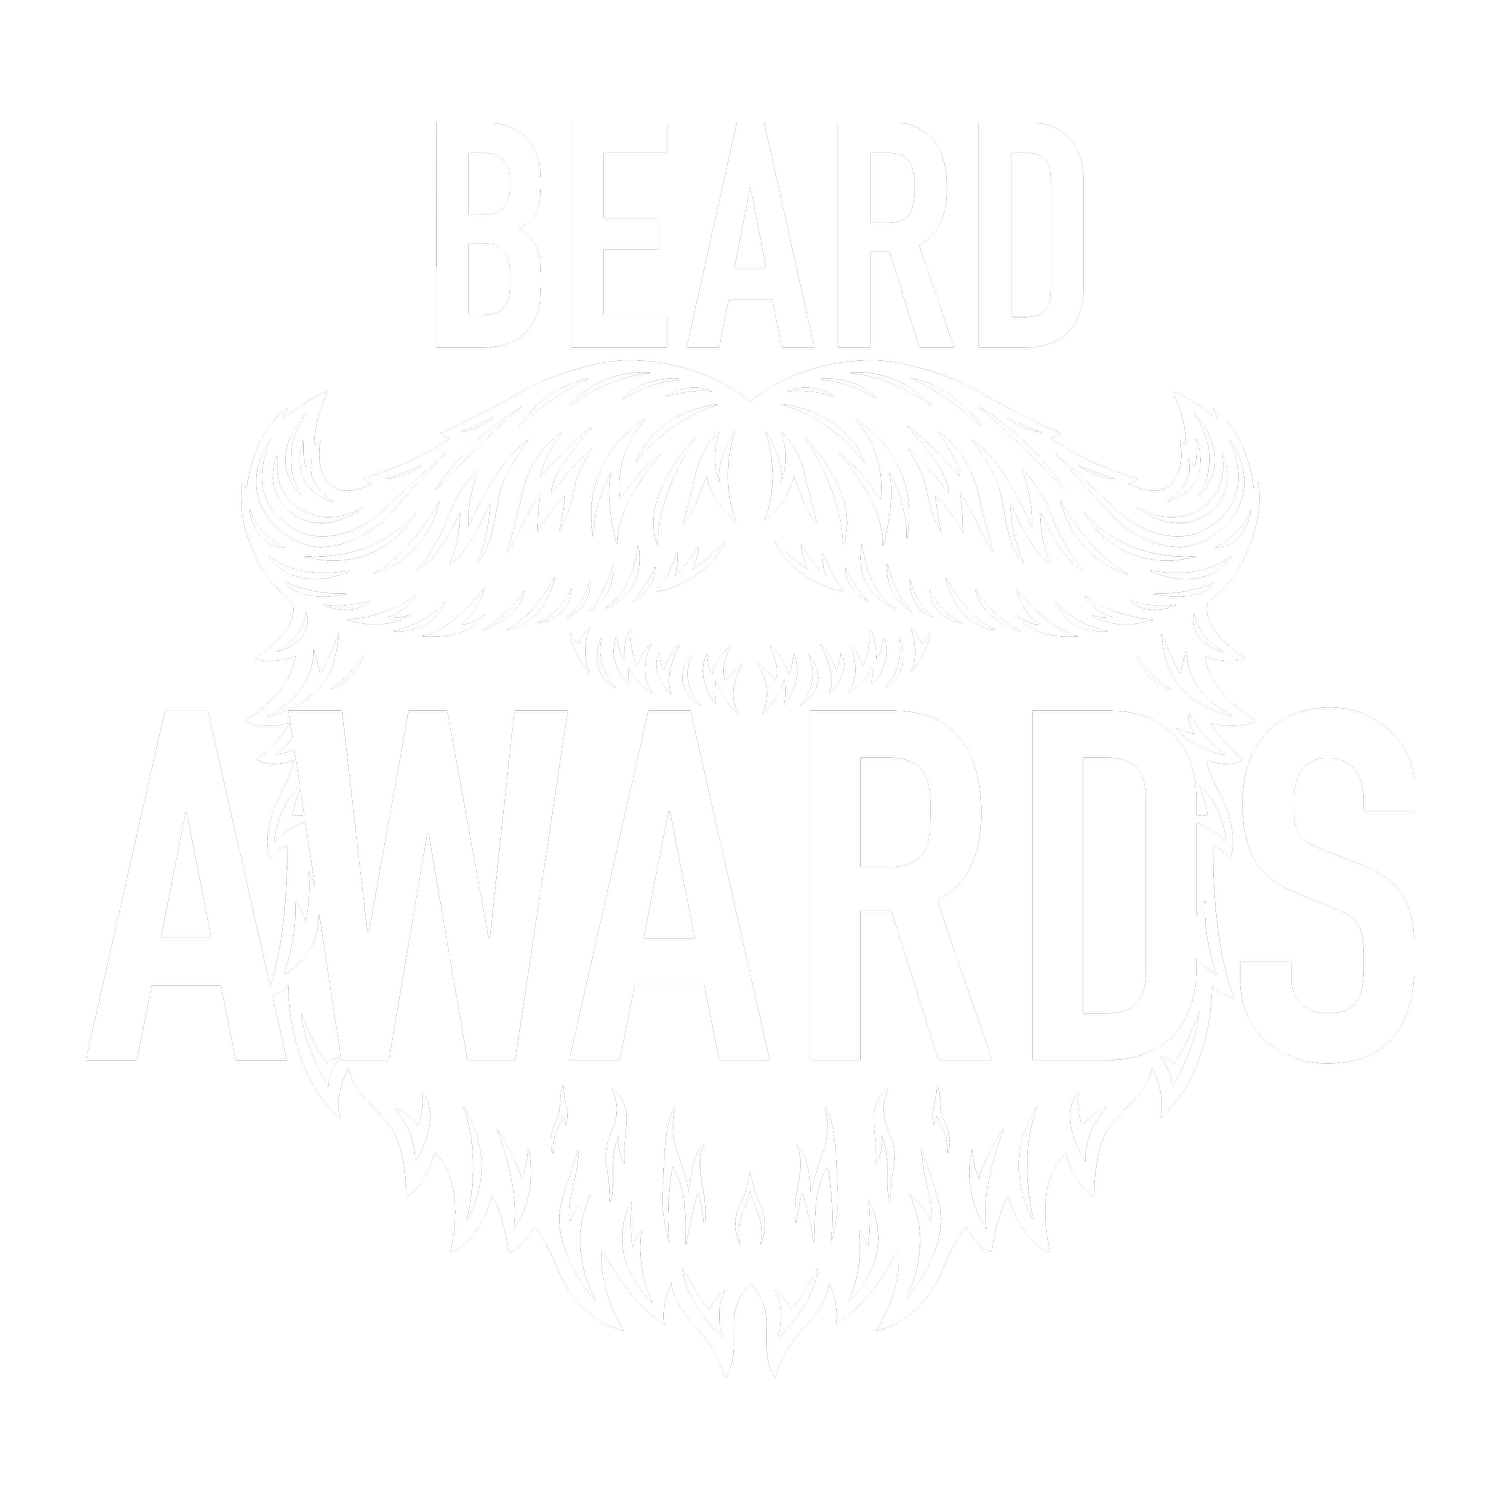 The Beard Awards